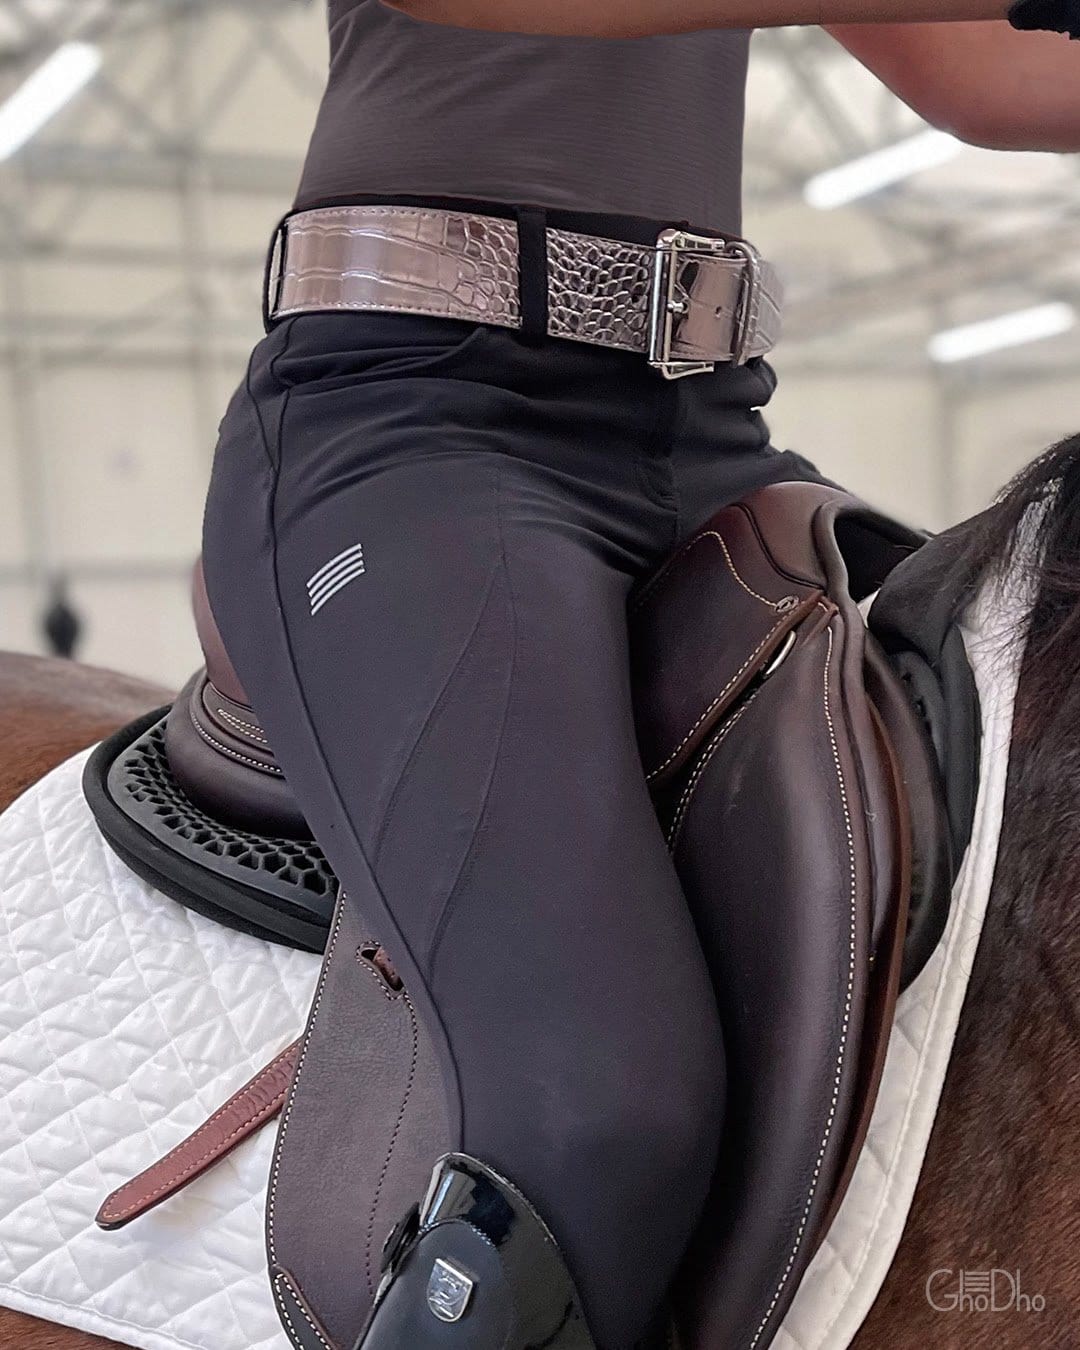 Equestrian Accessories Tagged belt - Equestrian Team Apparel